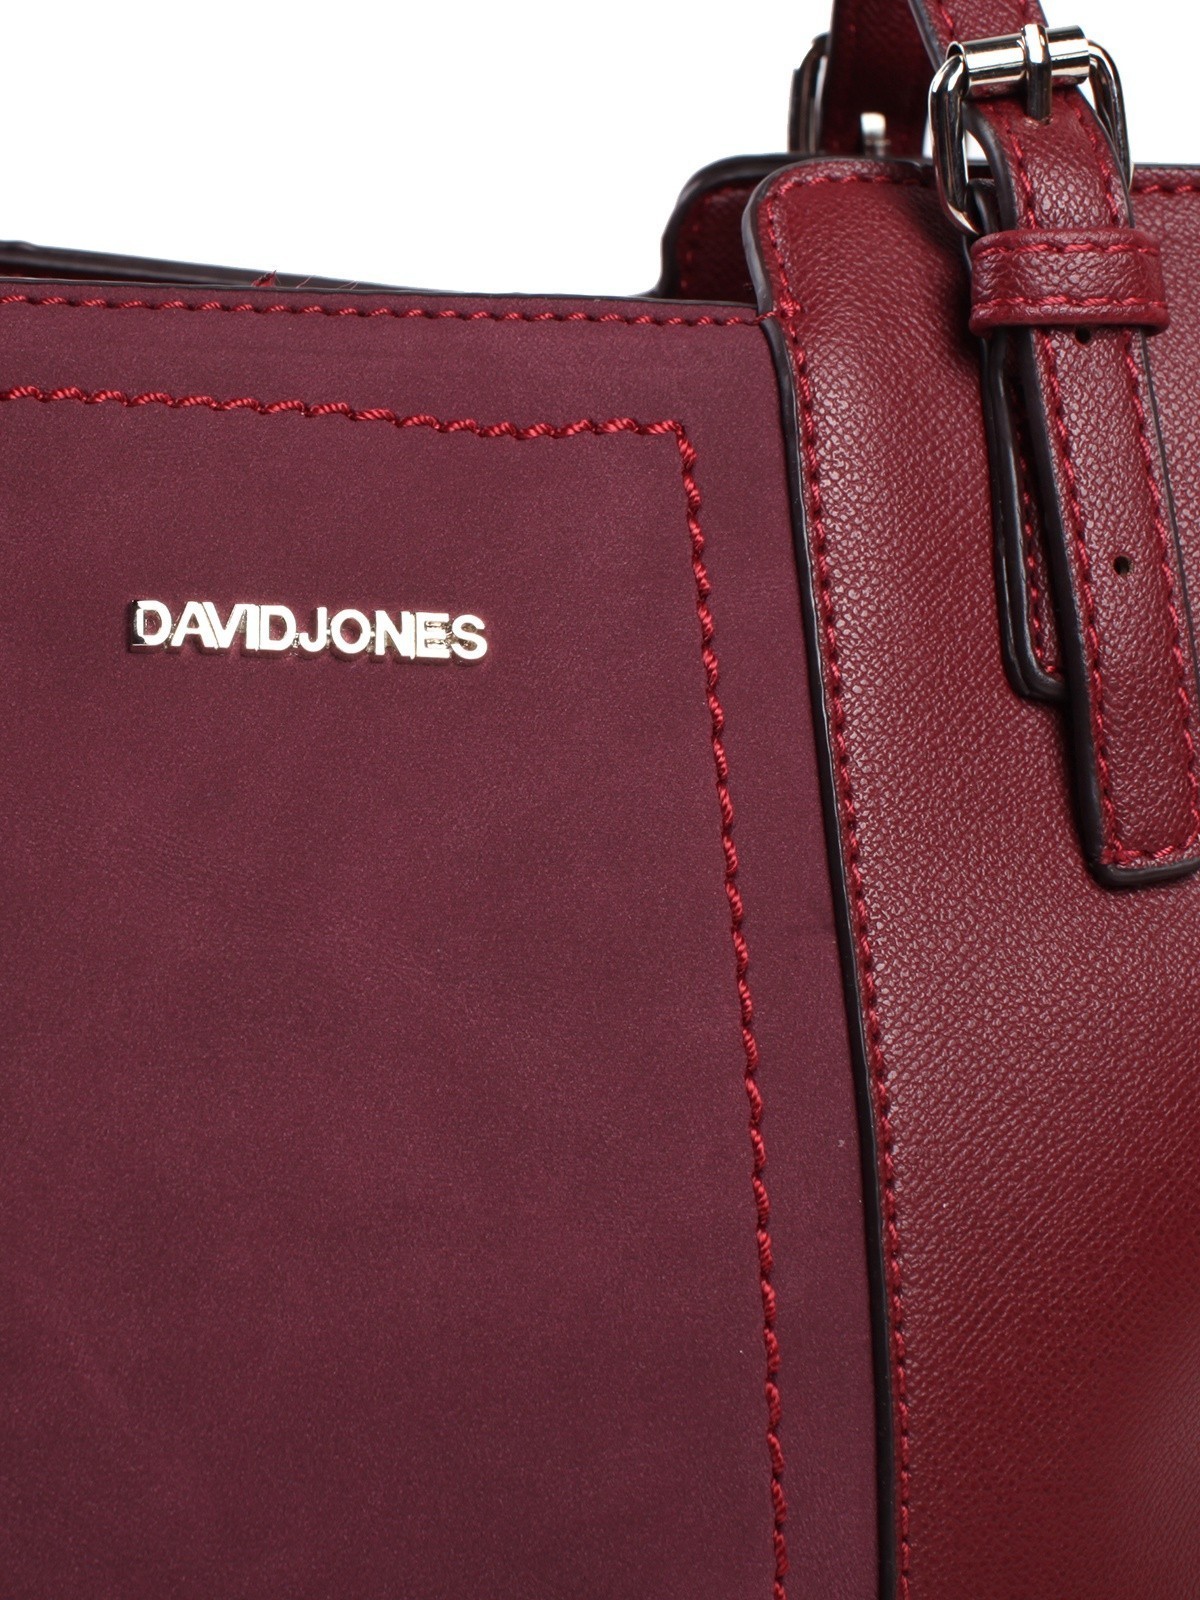 David Jones Paris Sling Bag / Leather Crossbody Bag